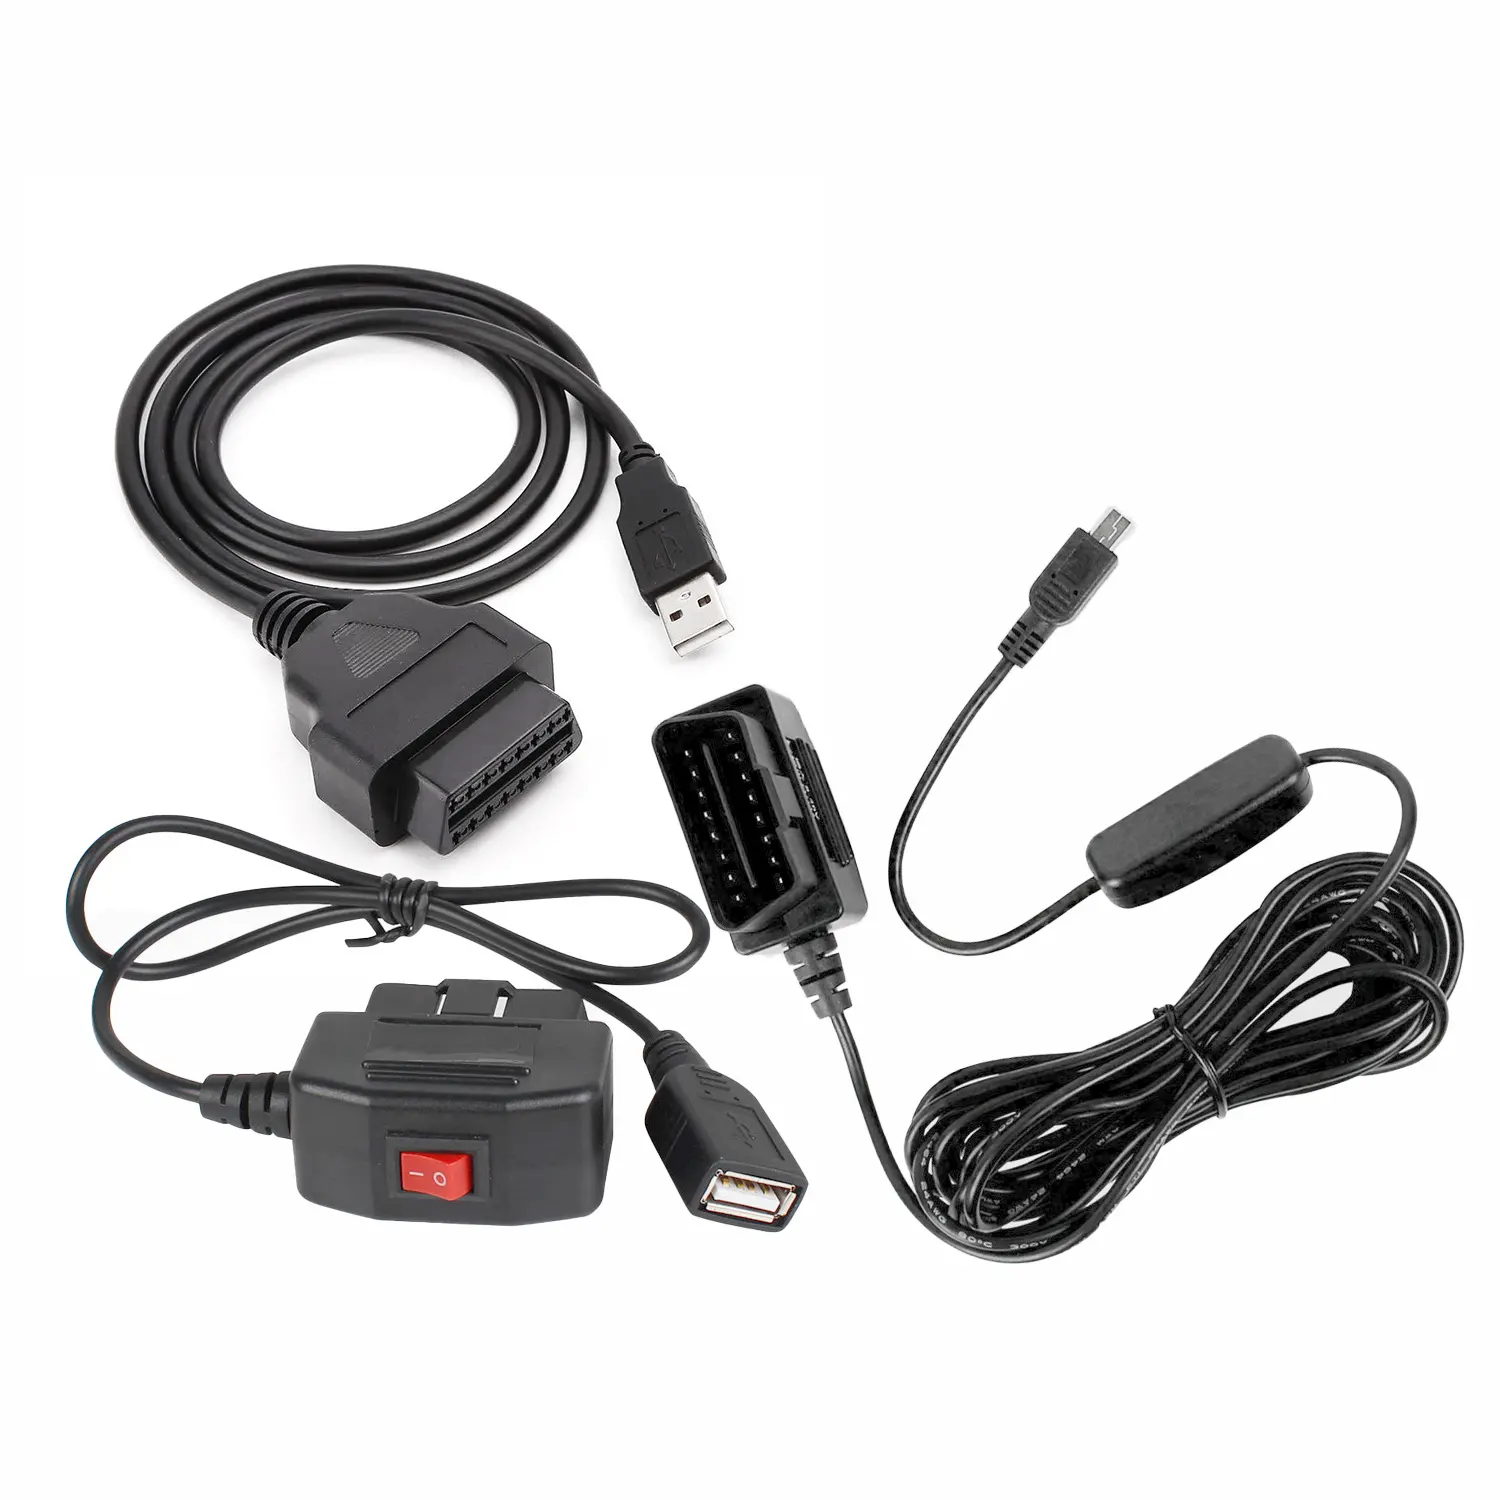 Araba OBDII OBD 2 16 Pin mikro Mini USB C Hardwire kiti OBD2 güç adaptörü kablosu için Dash kamera araç DVR